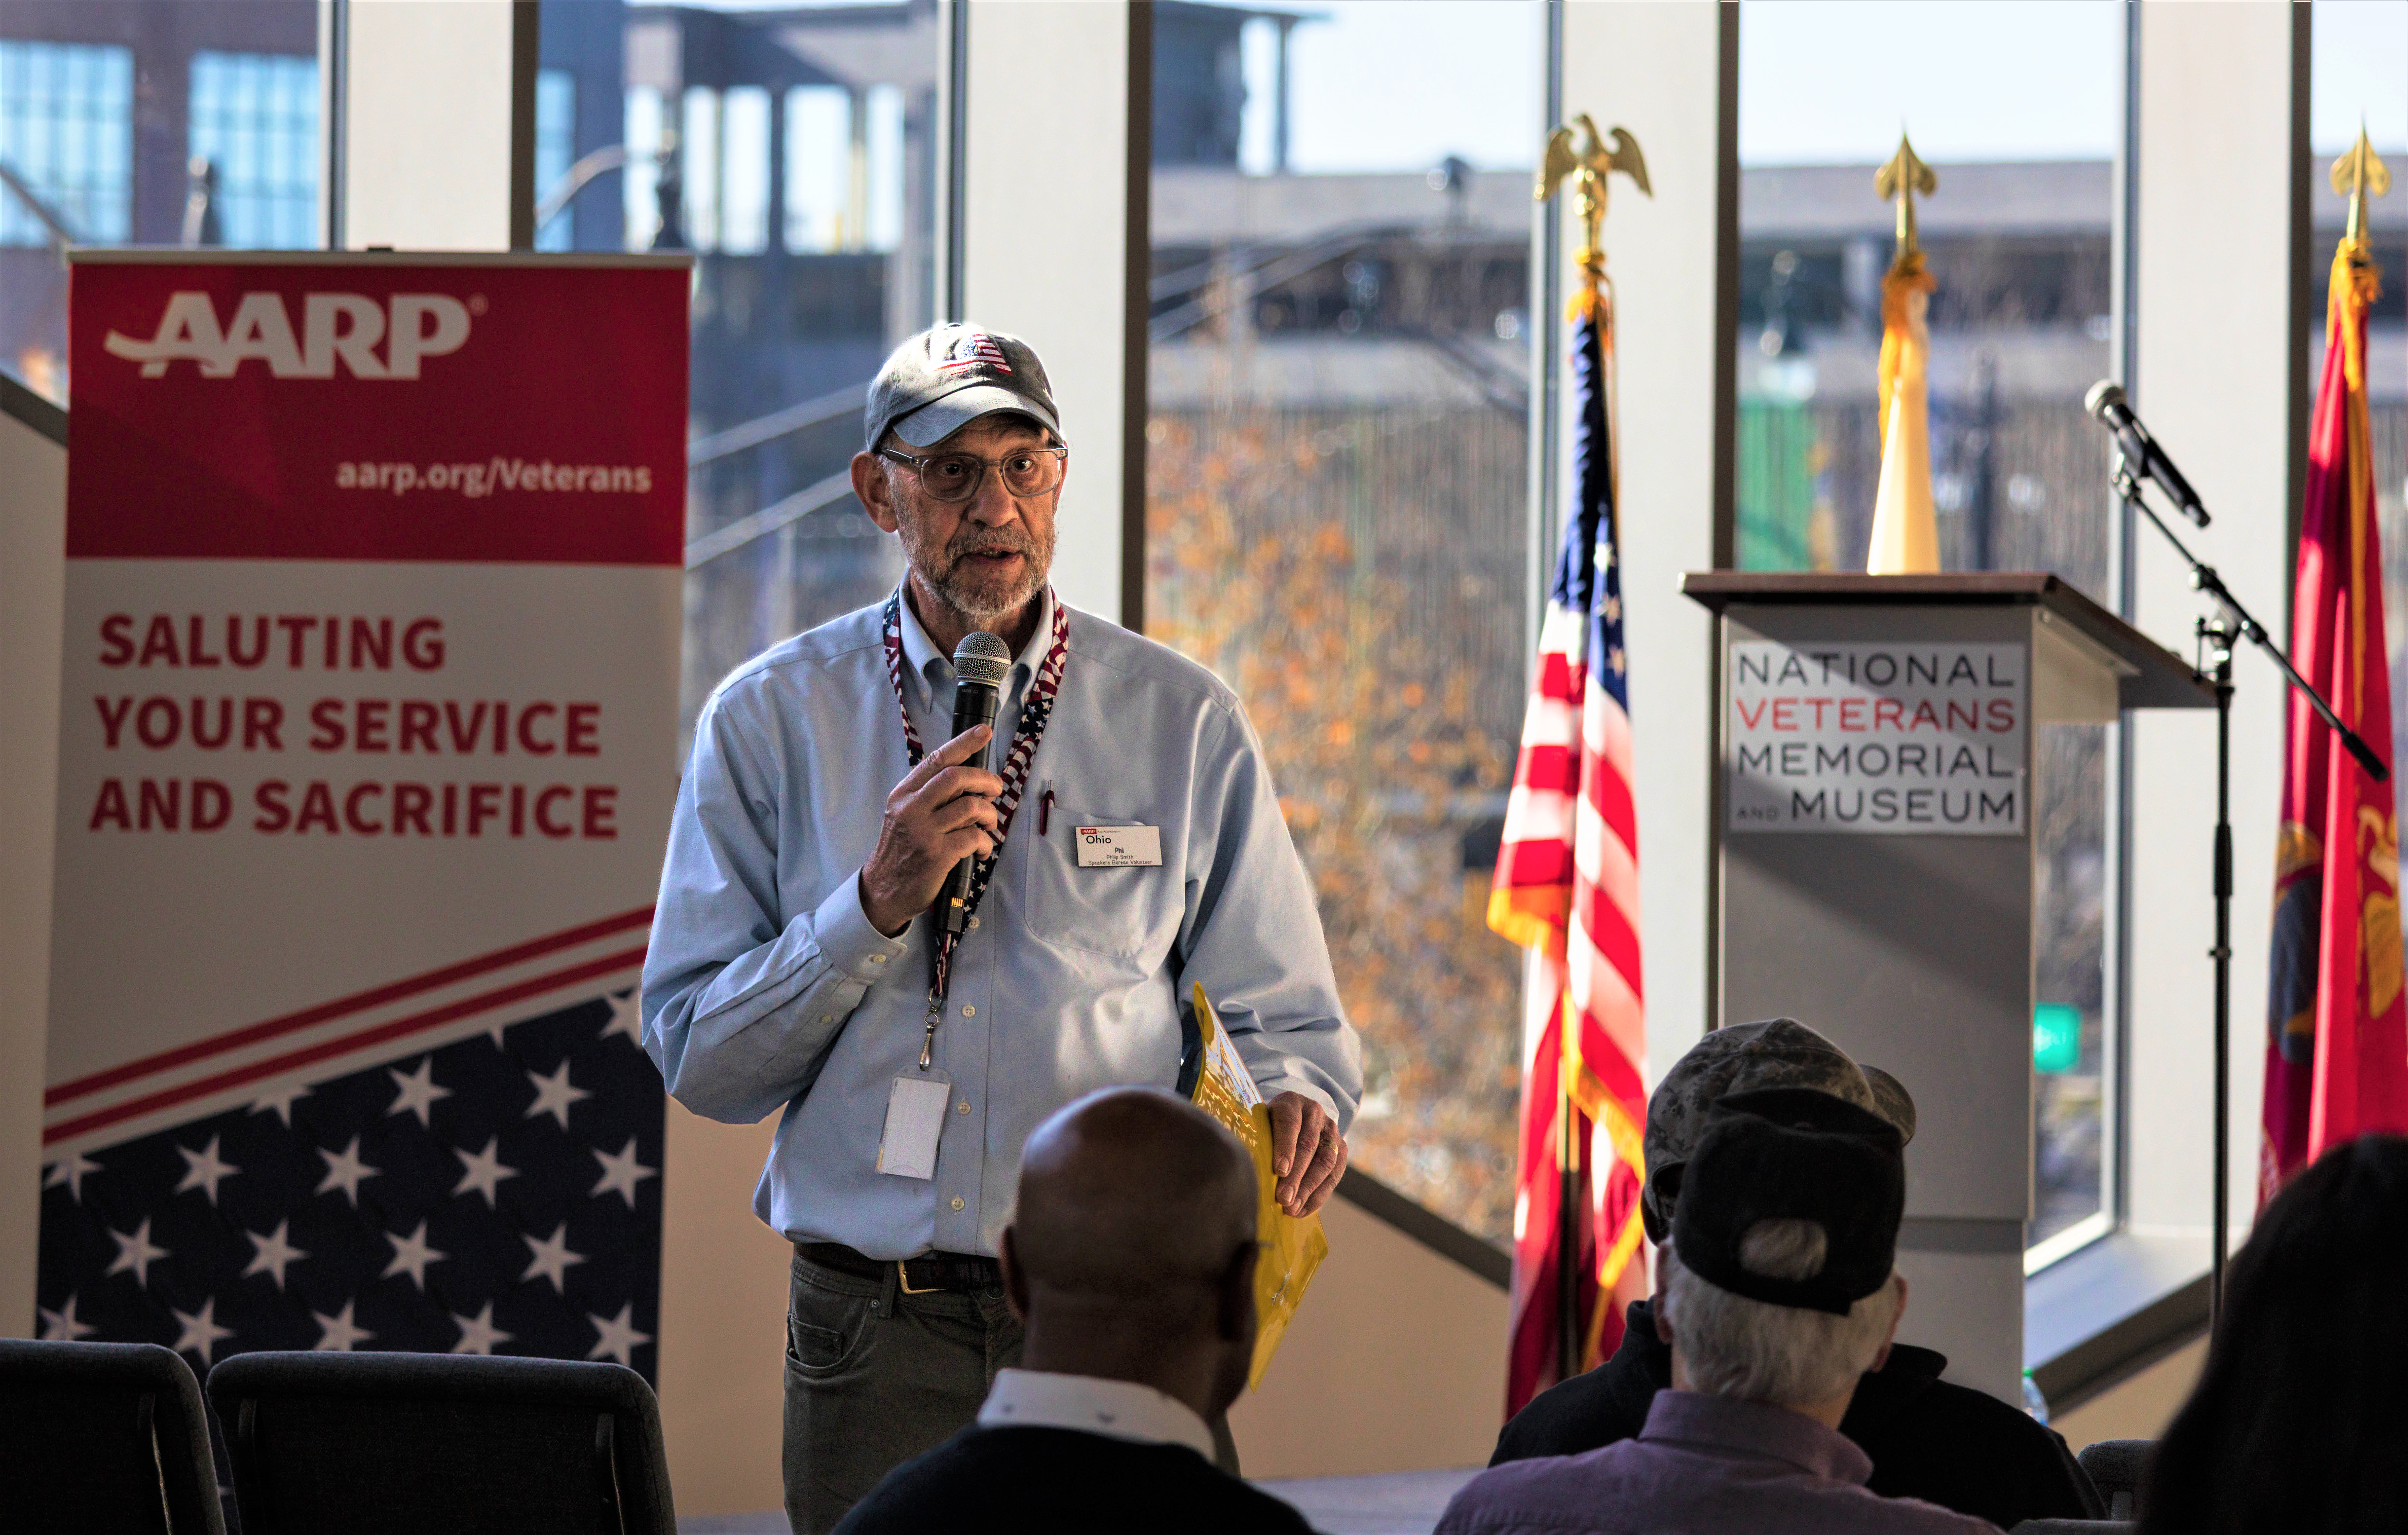 AARP Ohio volunteer speaker at veterans event at the National Veterans Memorial Museum in Columbus.